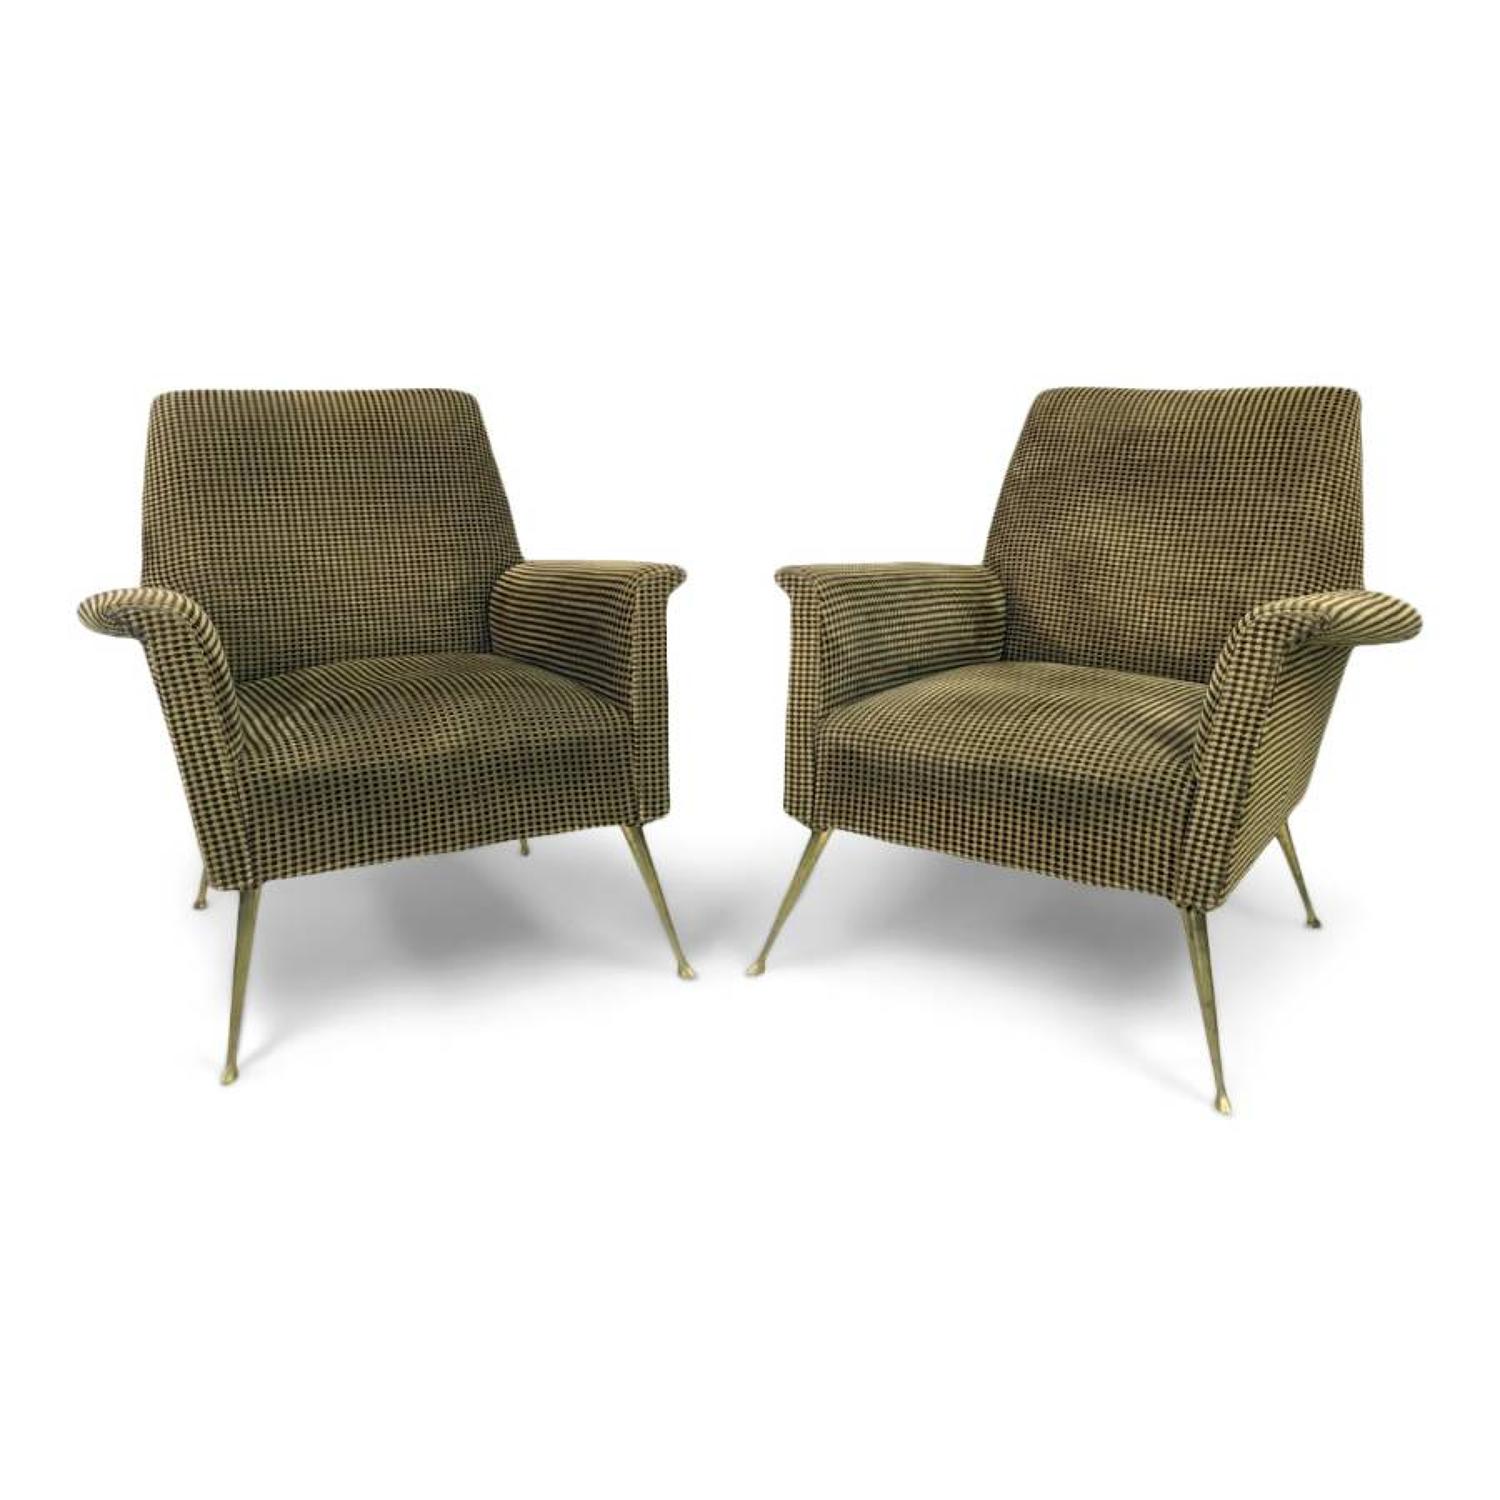 A pair of 1960s Italian armchairs